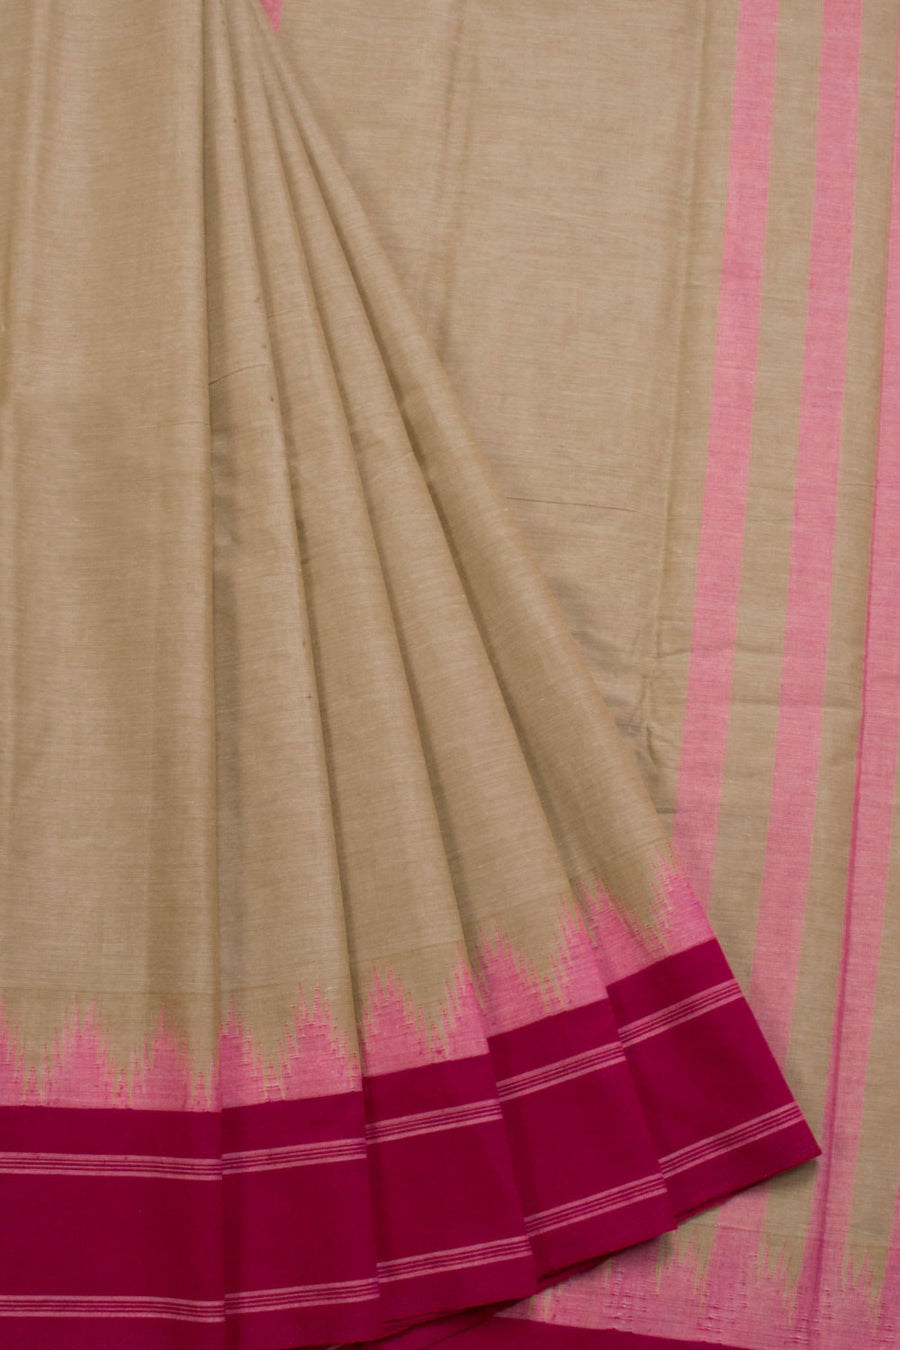 Dual Shot Handloom Kanchi Cotton Saree 10069393 - Avishya